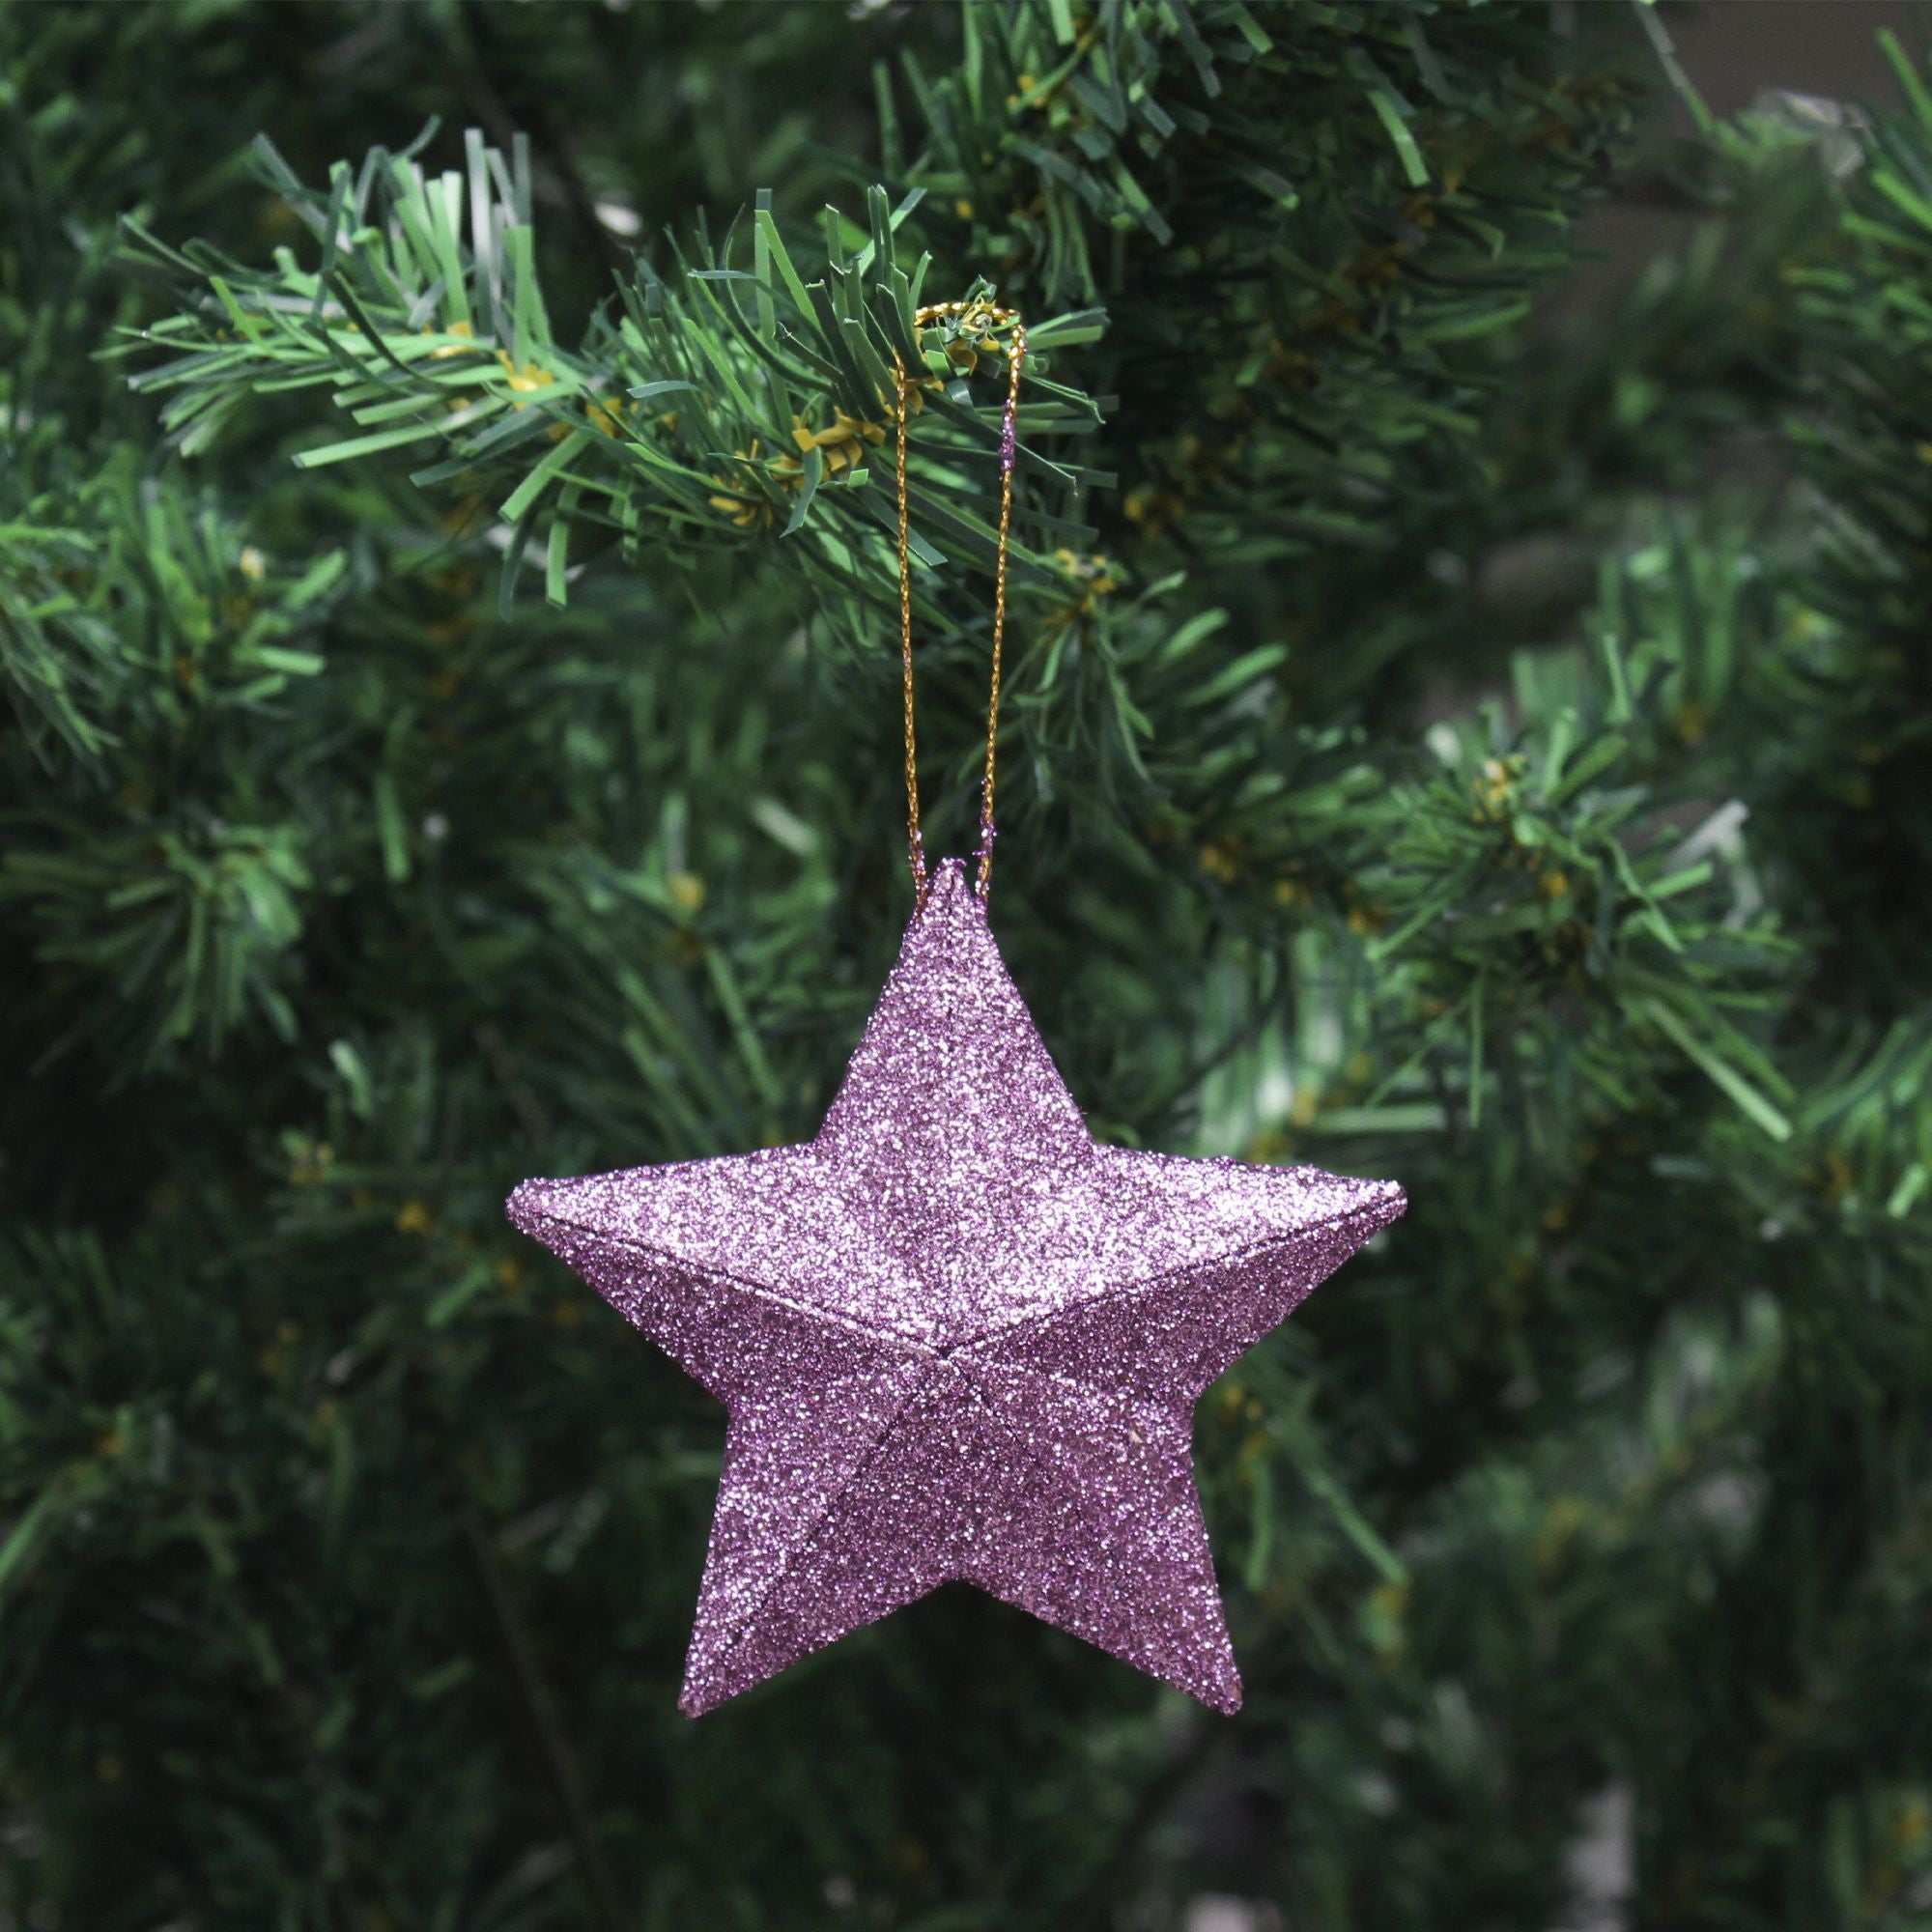 Handmade Christmas Ornaments - 3D Glitter Star s, 2inch, Purple, 8pc